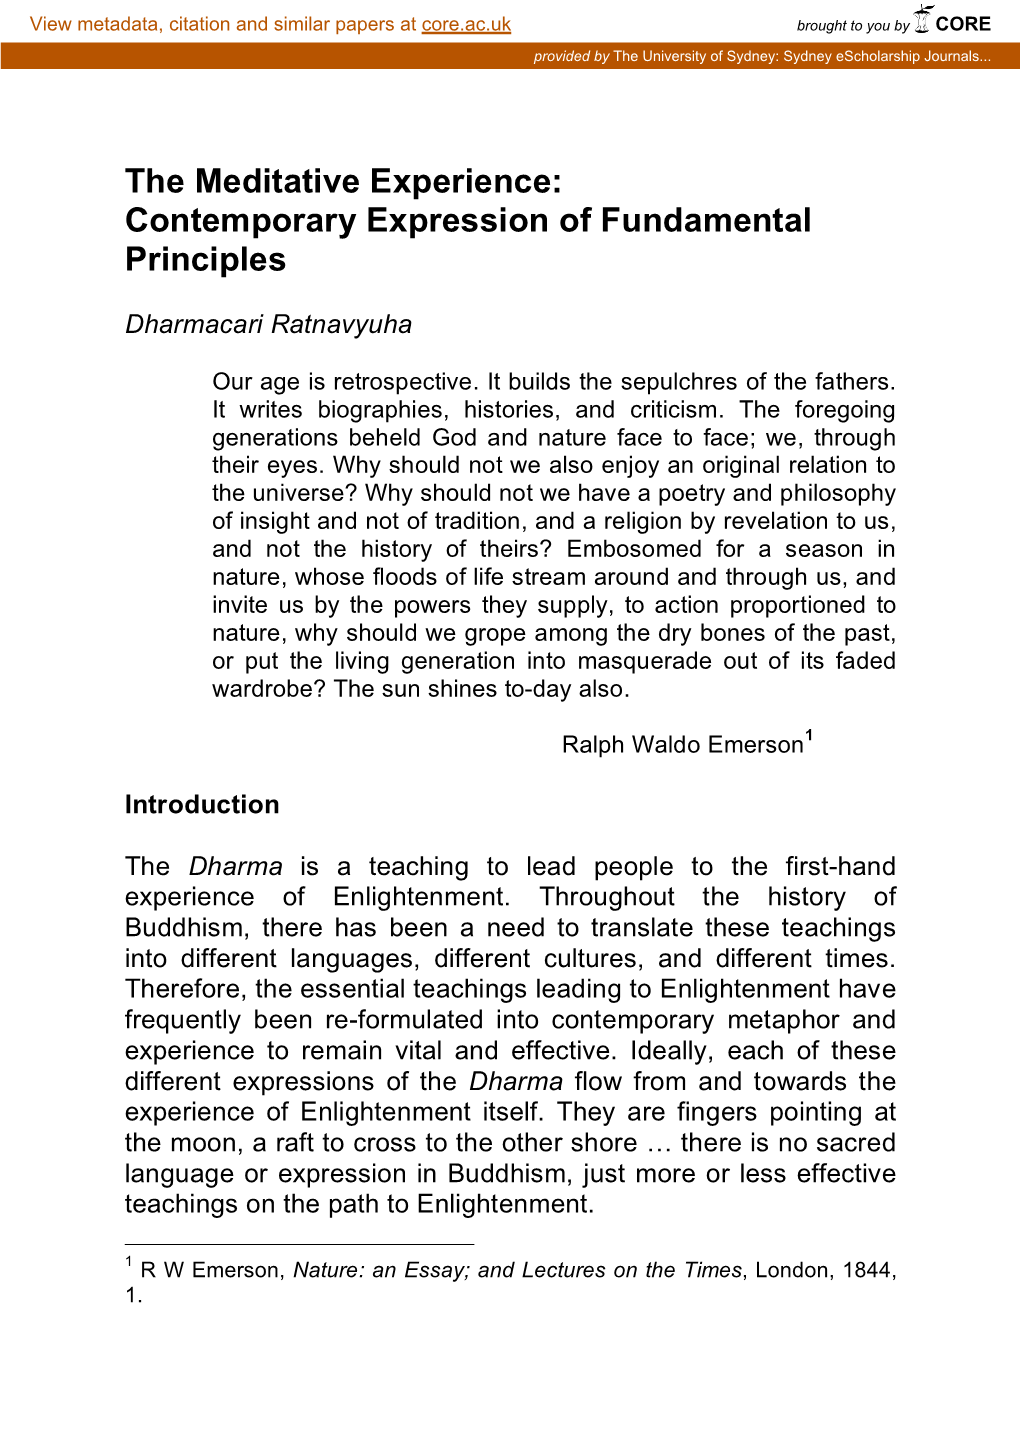 The Meditative Experience: Contemporary Expression of Fundamental Principles